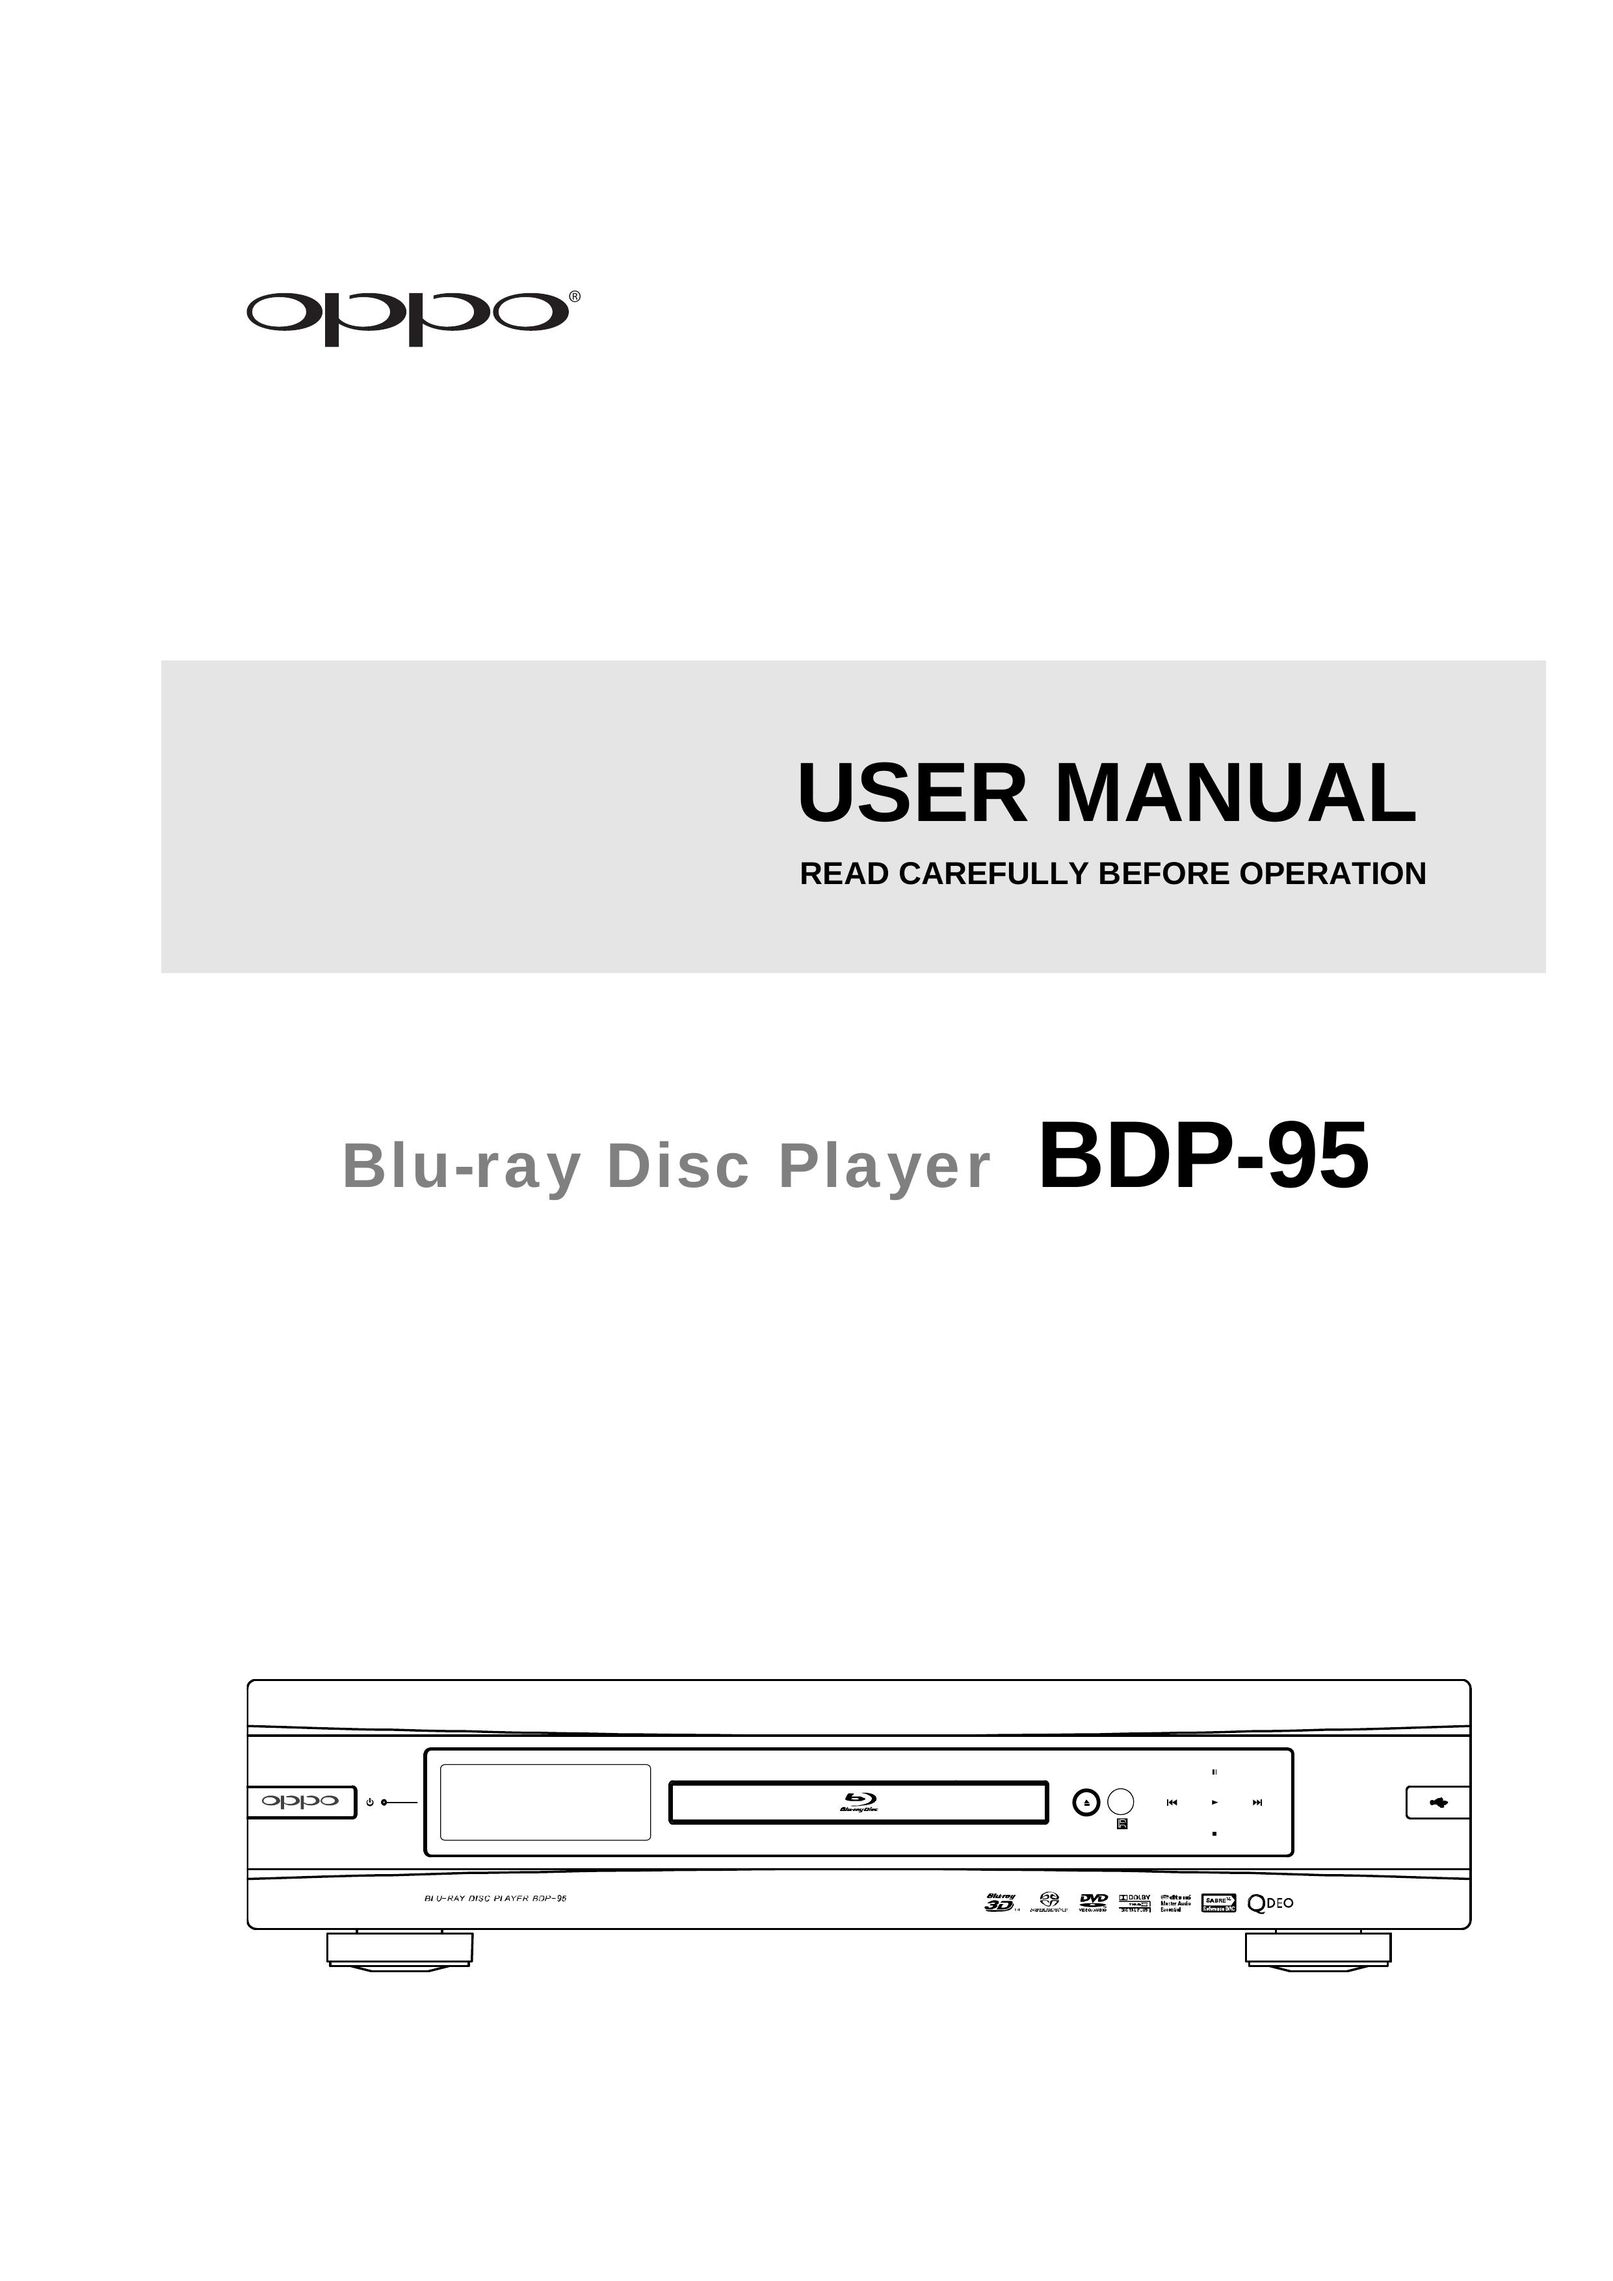 OPPO Digital BDP-95 Blu-ray Player User Manual